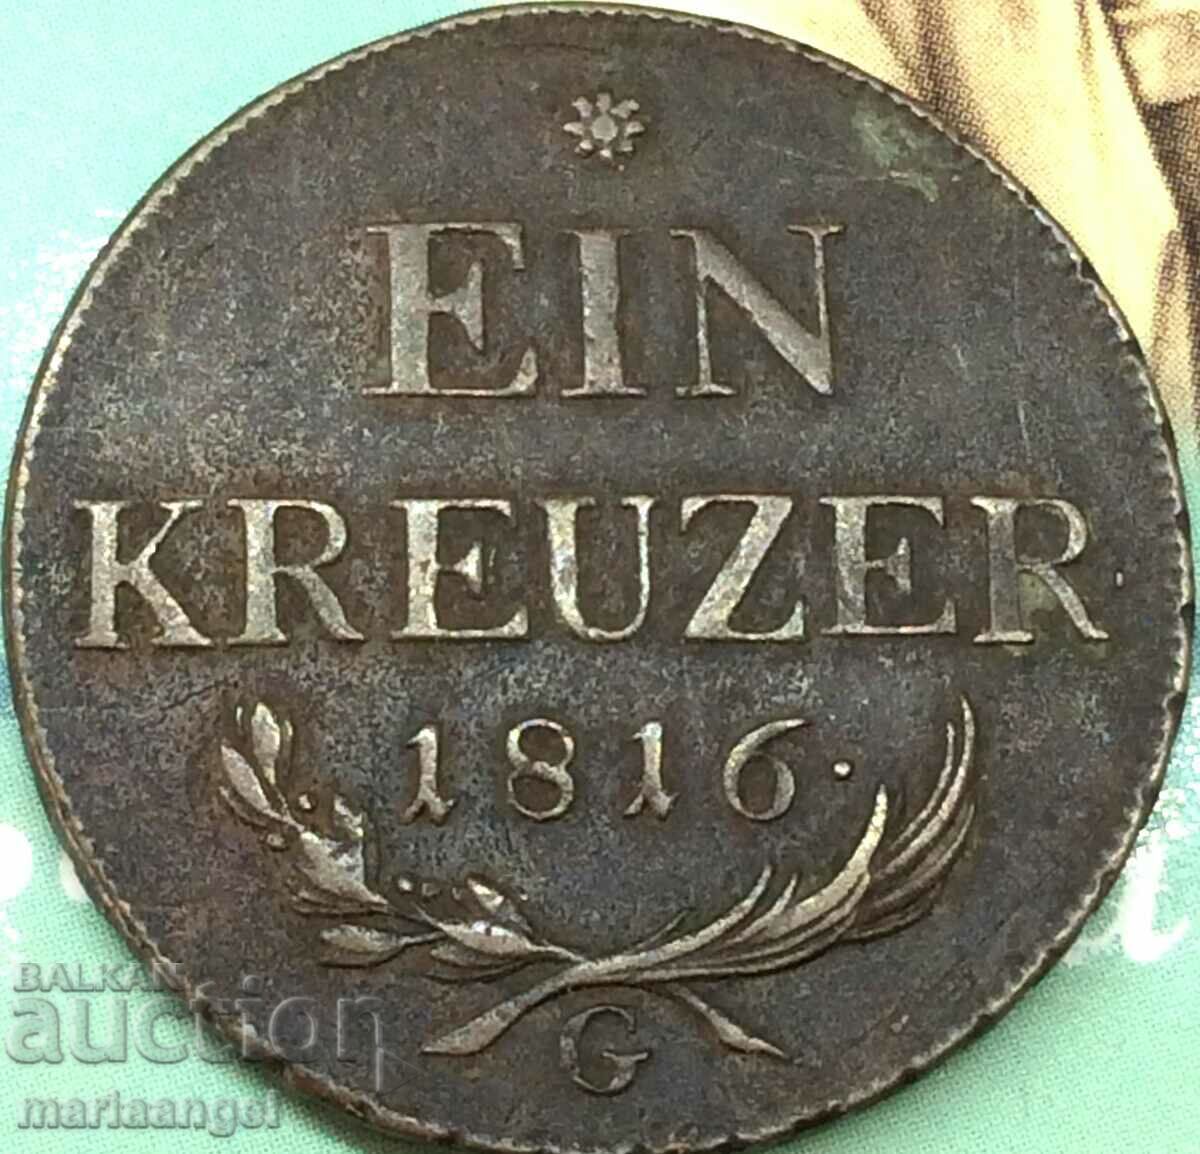 1 Kreuzer 1816 Αυστρία G - Τρανσυλβανία - αρκετά σπάνιο